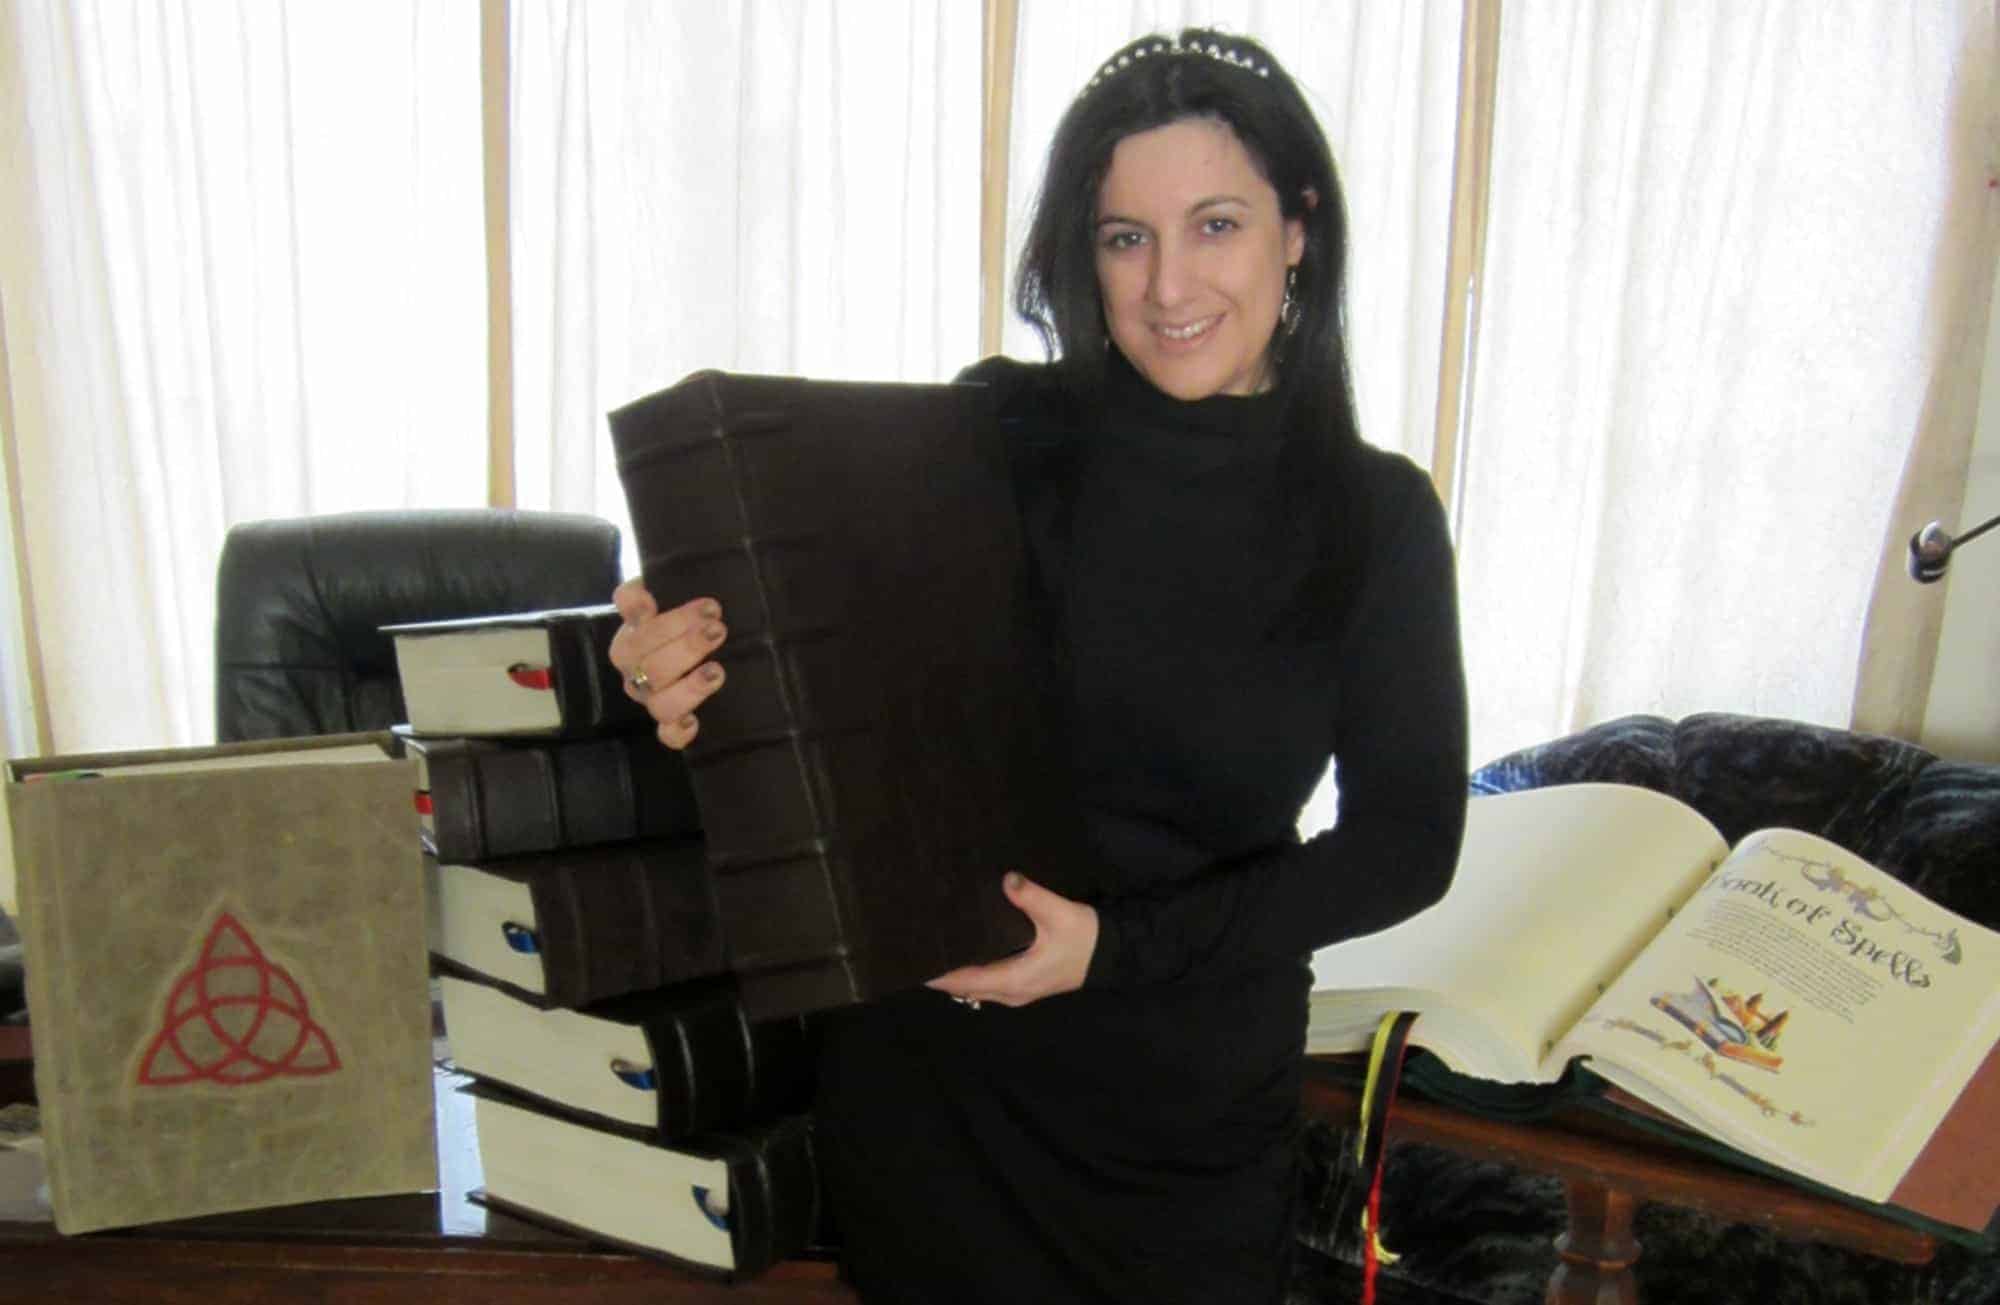 LaPulia founder Rita Digilova with her books